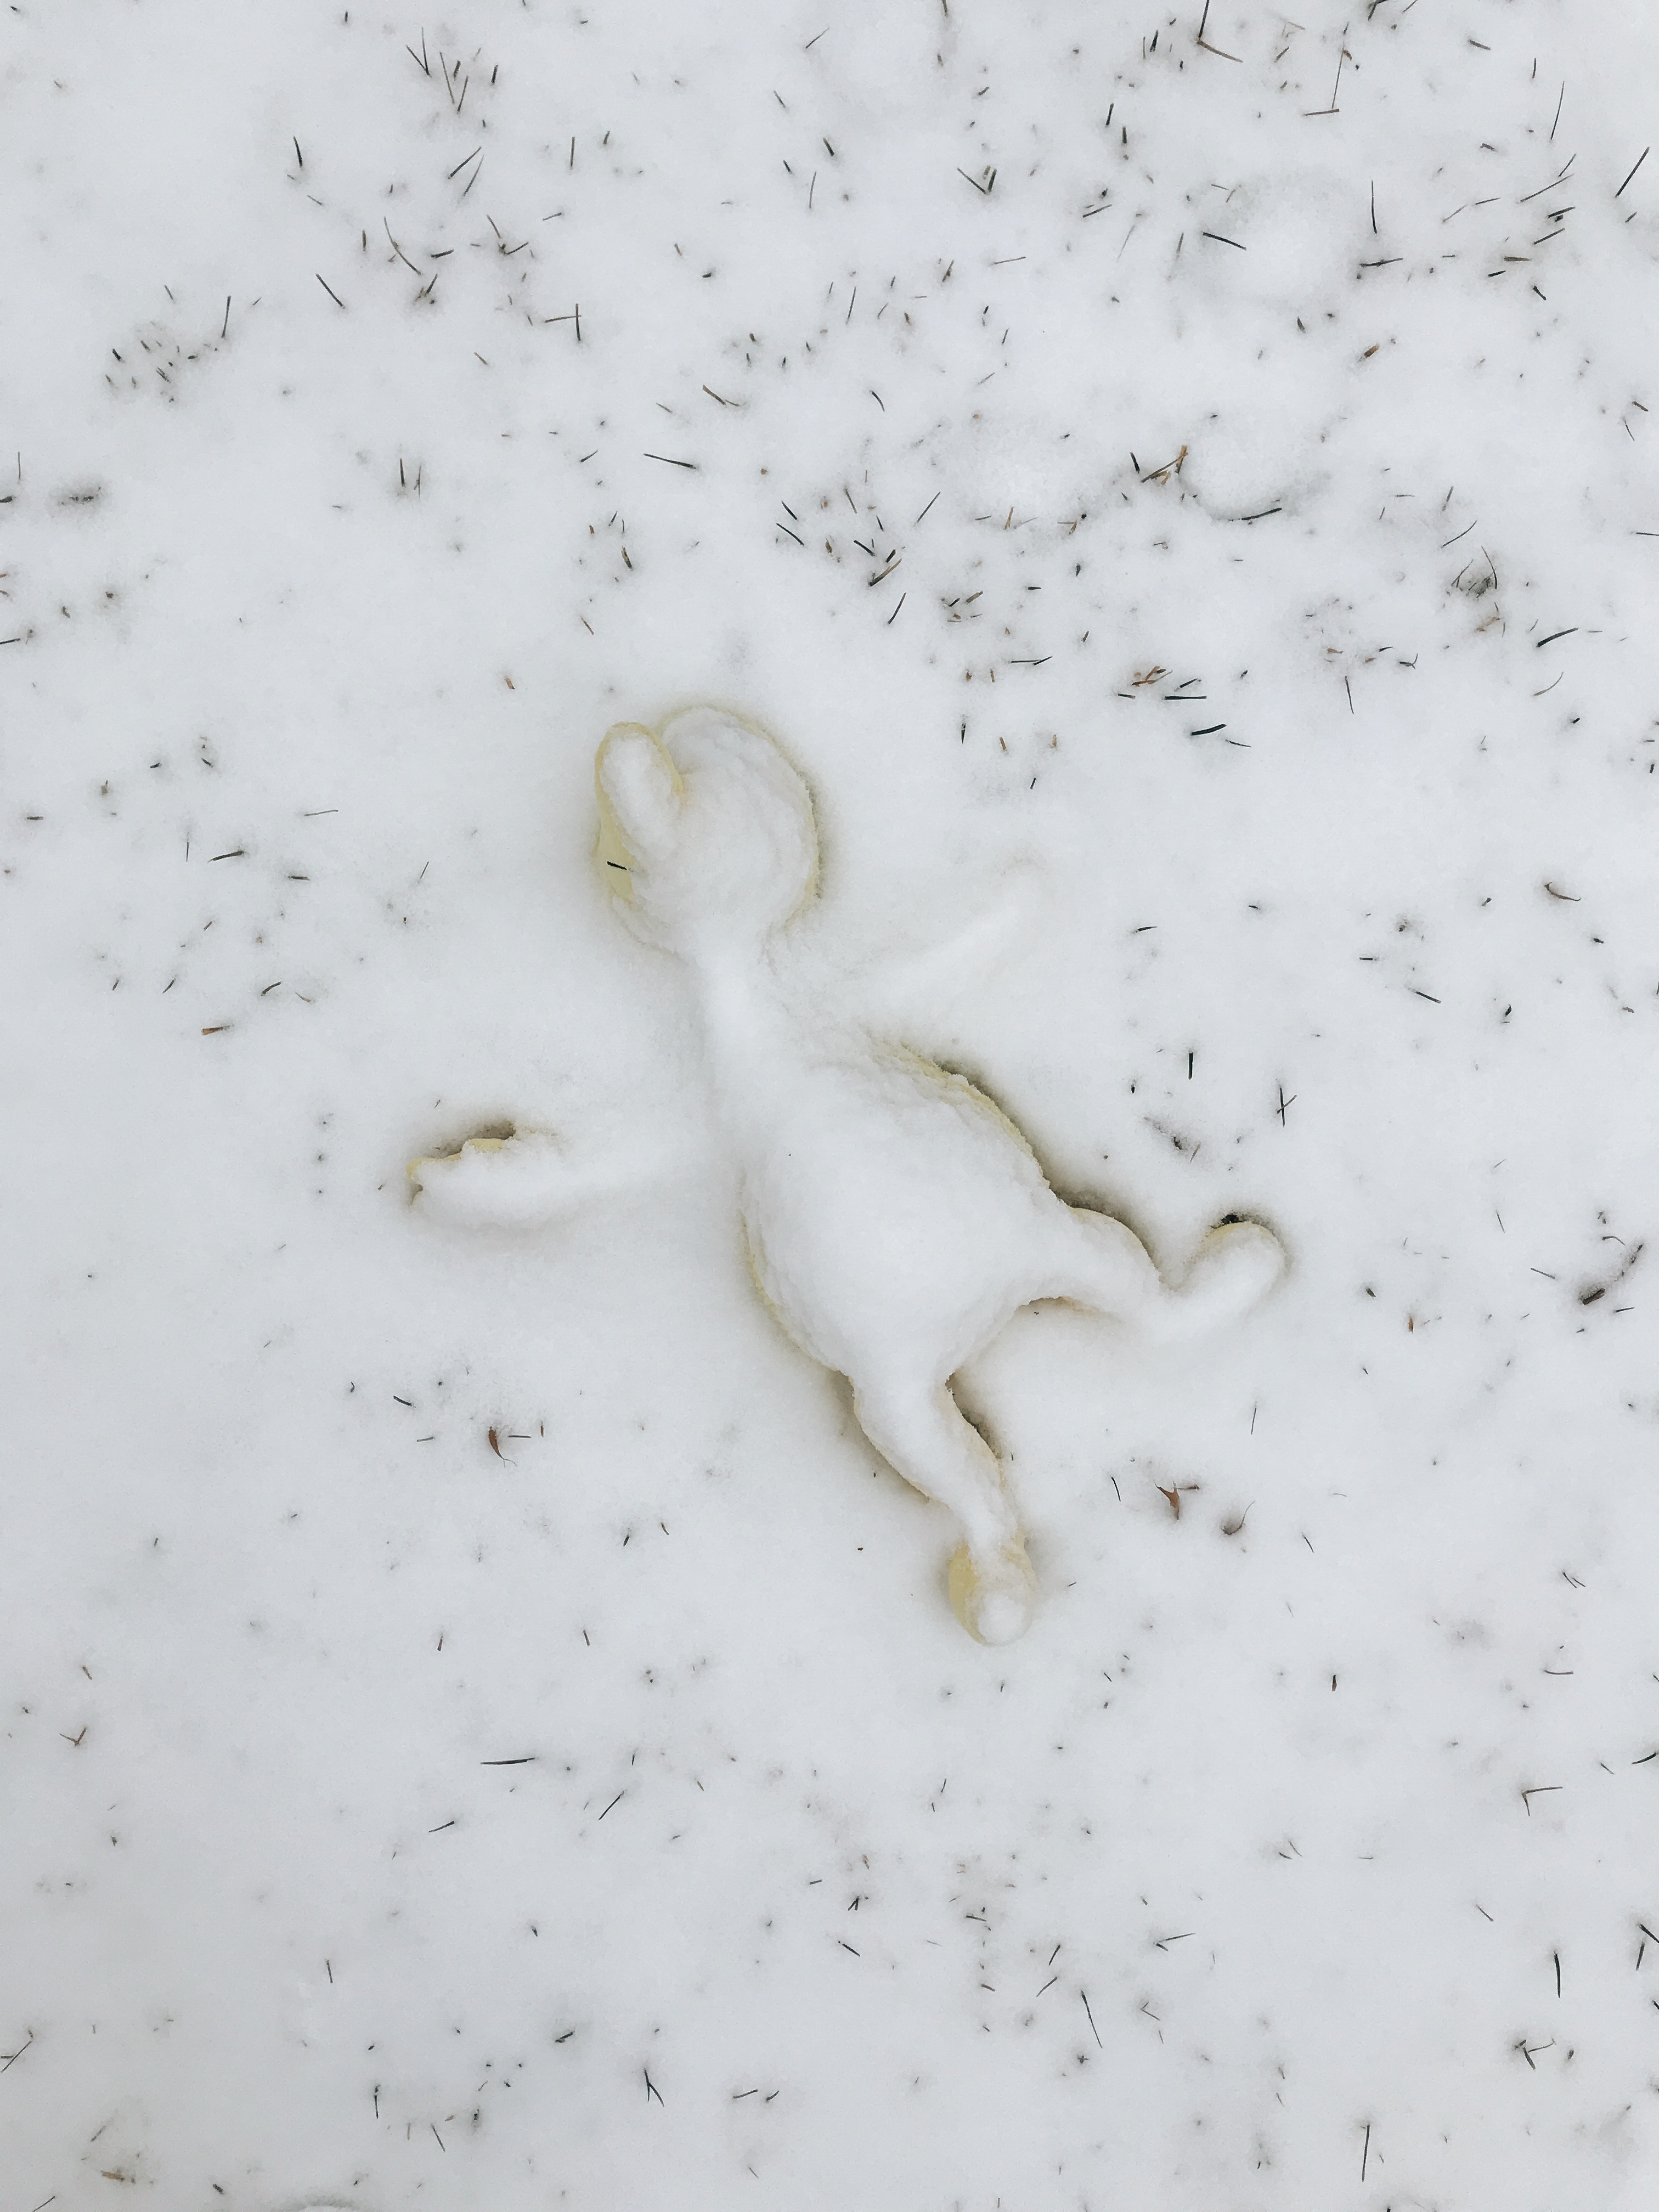 stuffed animal in snow. AHAHAH.